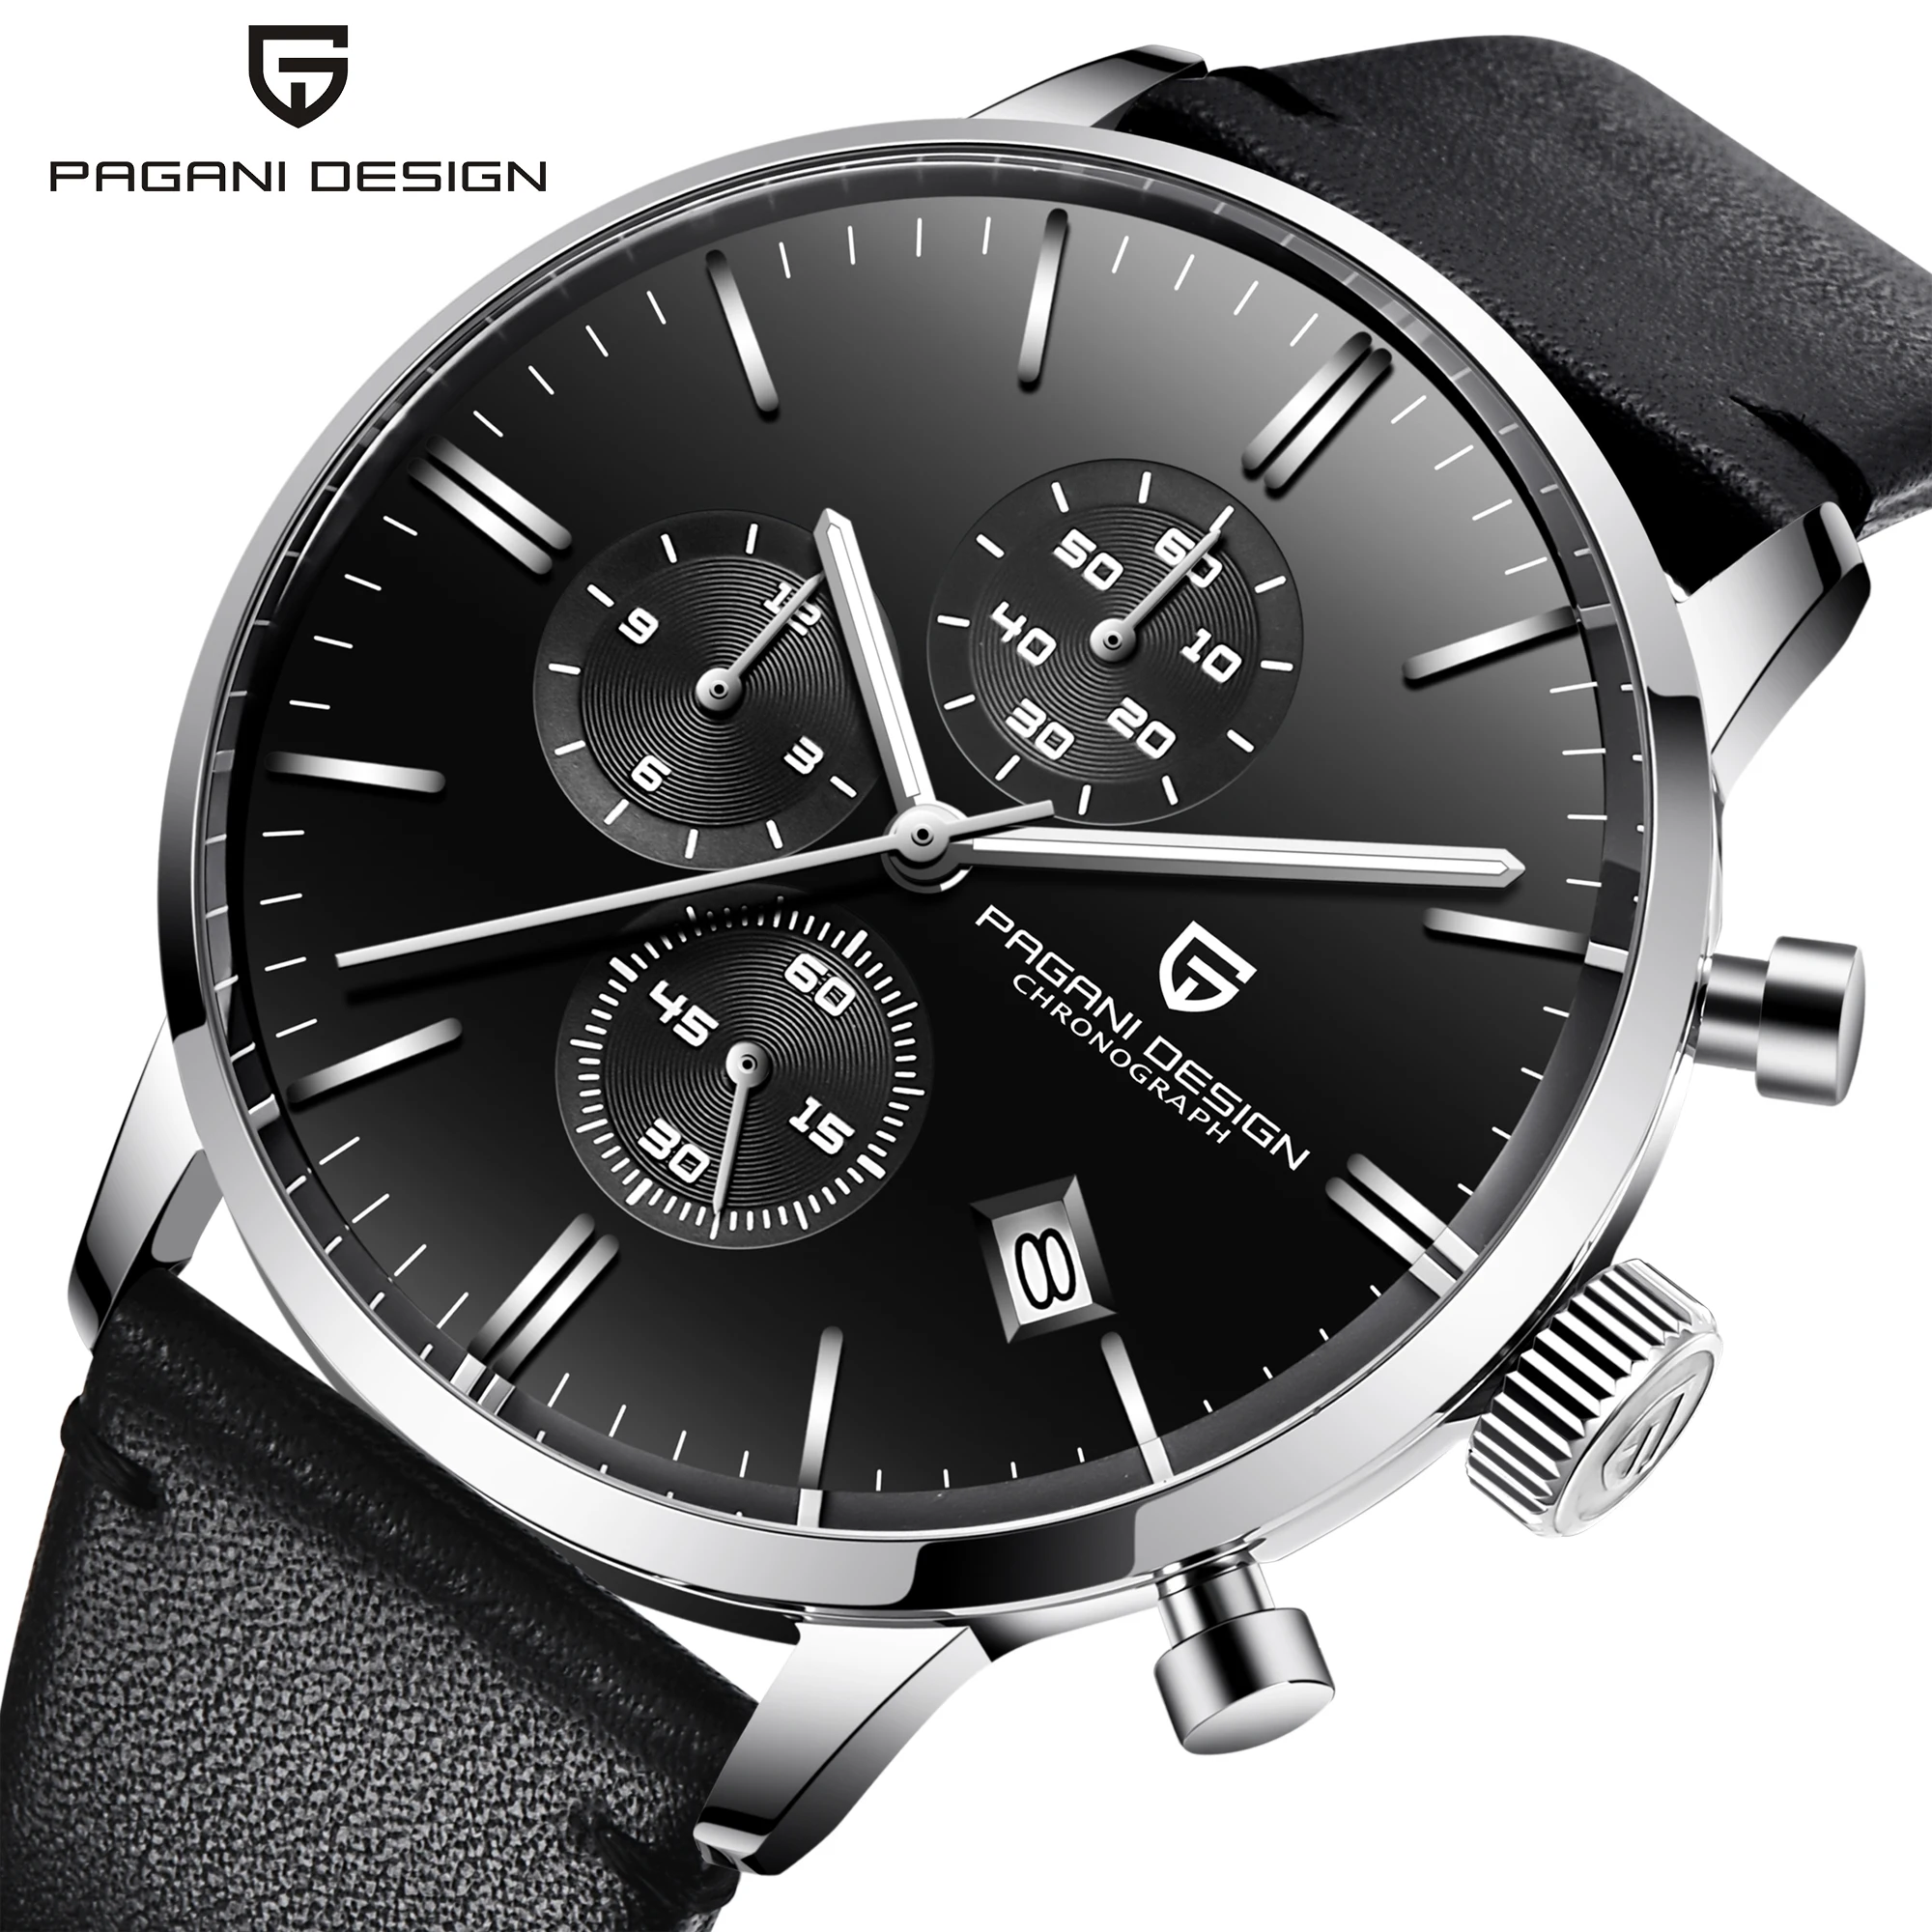 

PAGANI DESIGN 2720 Mens Watches Luxury Waterproof 30M Genuine Leather Japanese VK67 Movement Quartz Watch Relogio Masculino